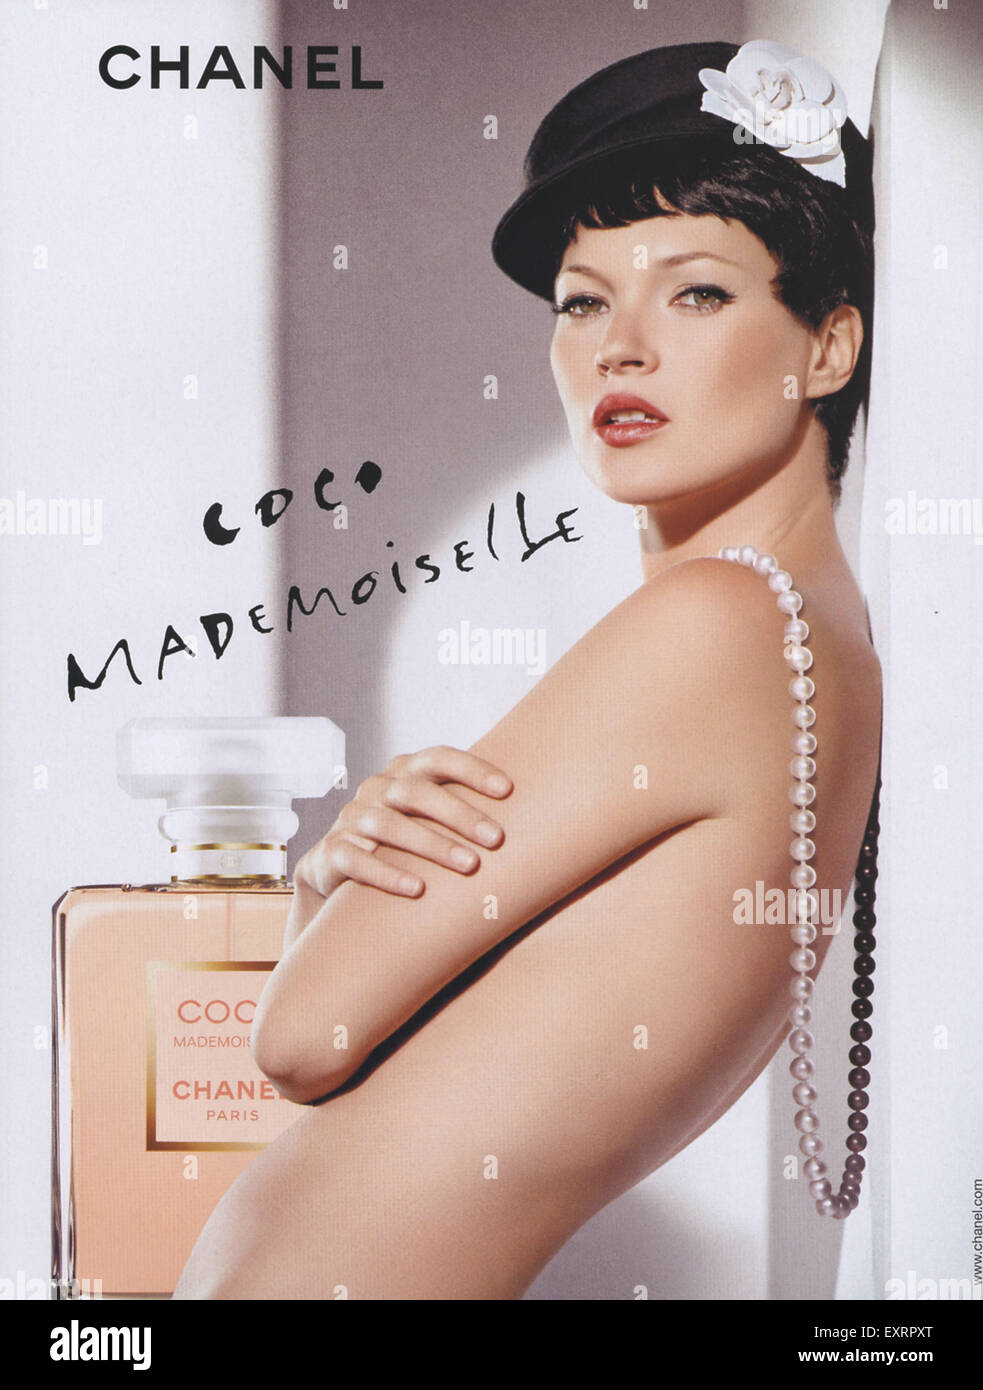 2000s UK Chanel Magazine Advert Stock Photo - Alamy